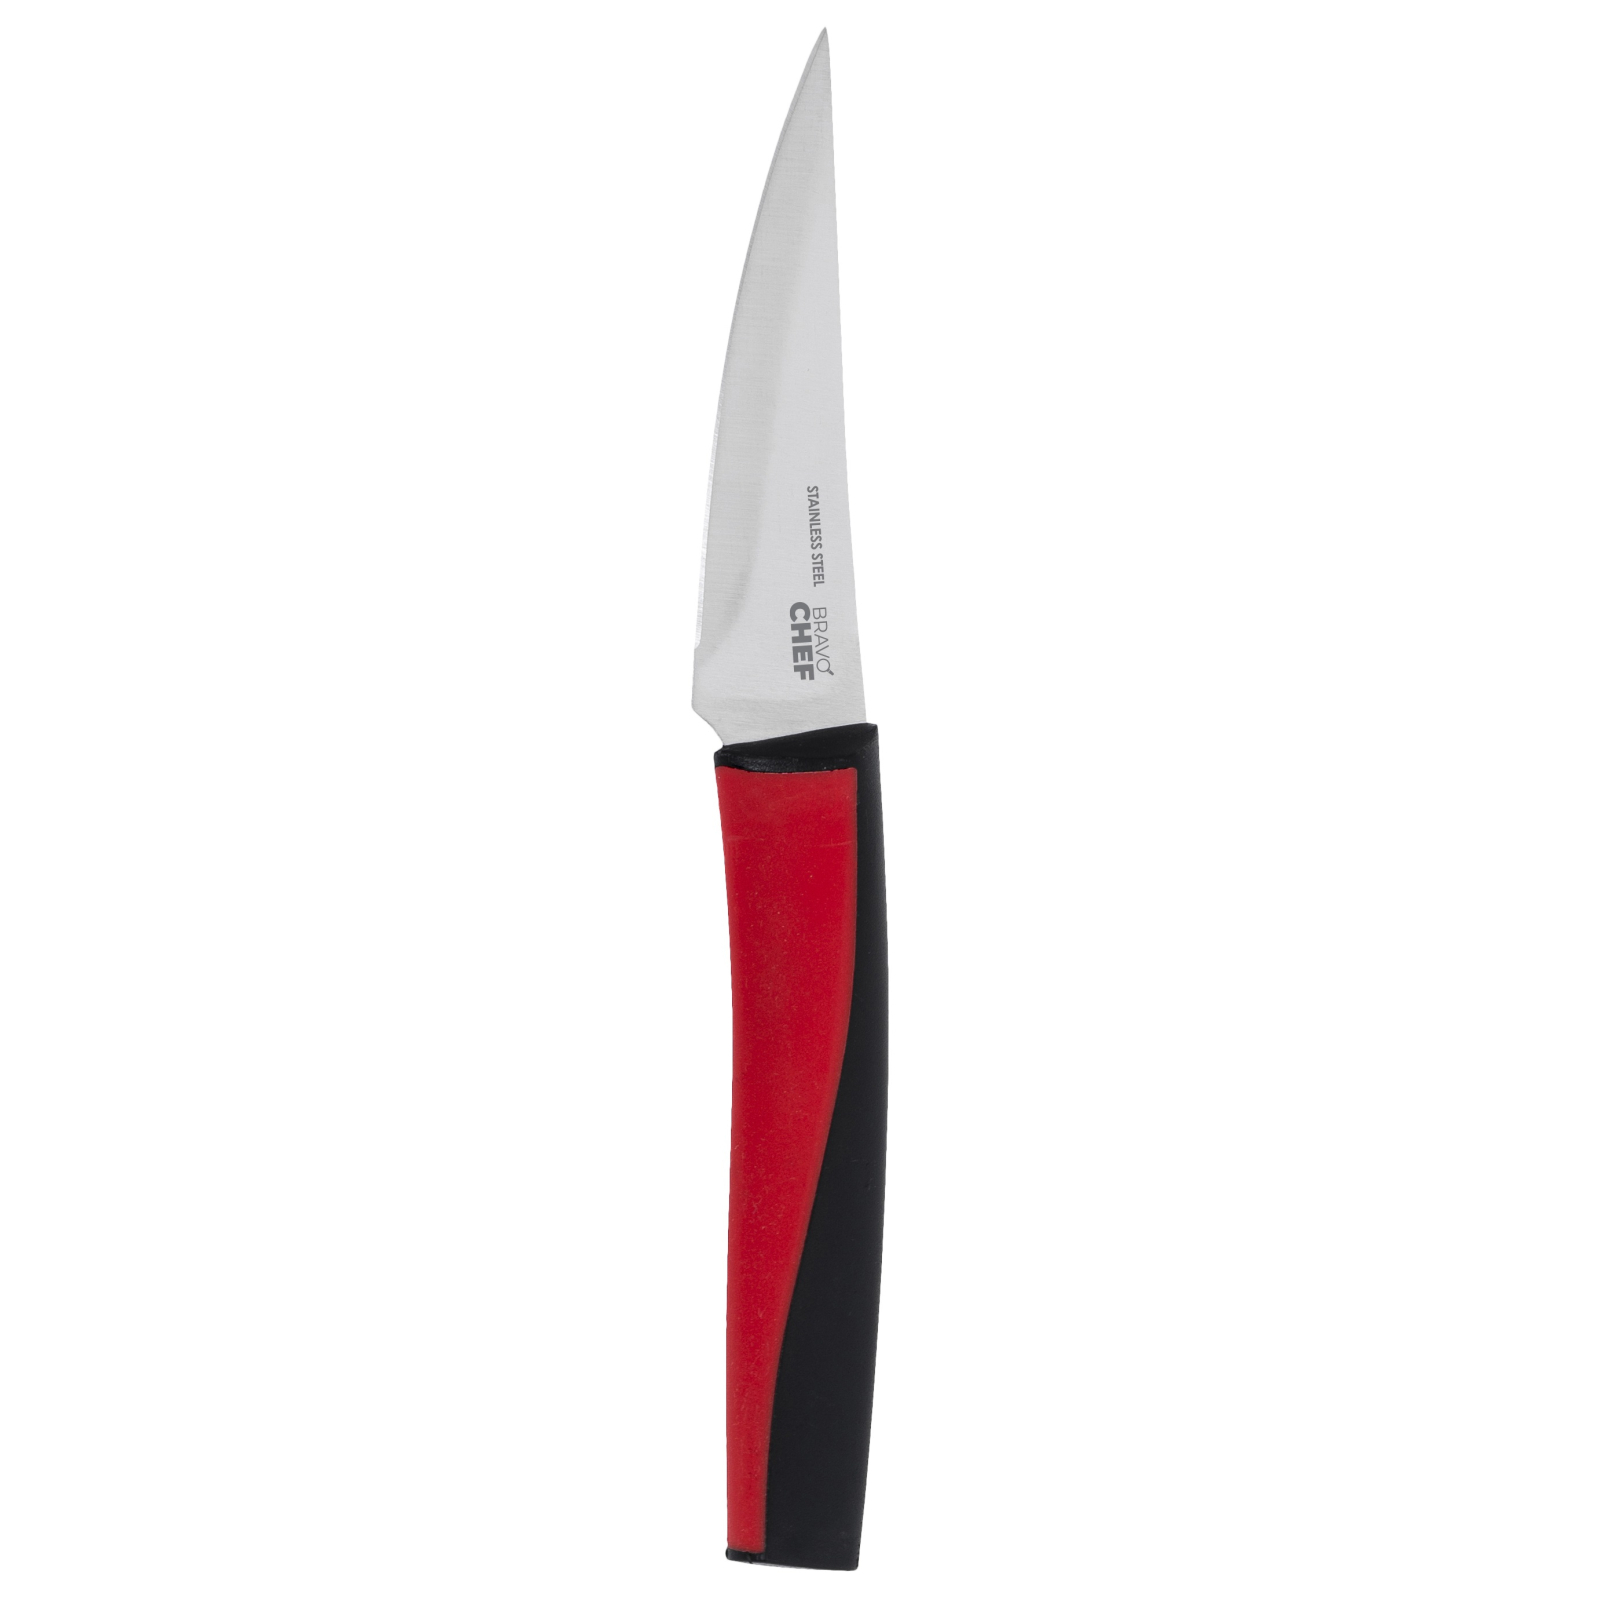 Кухонный нож Bravo Chef Vegetable 9 см (BC-11000-1)